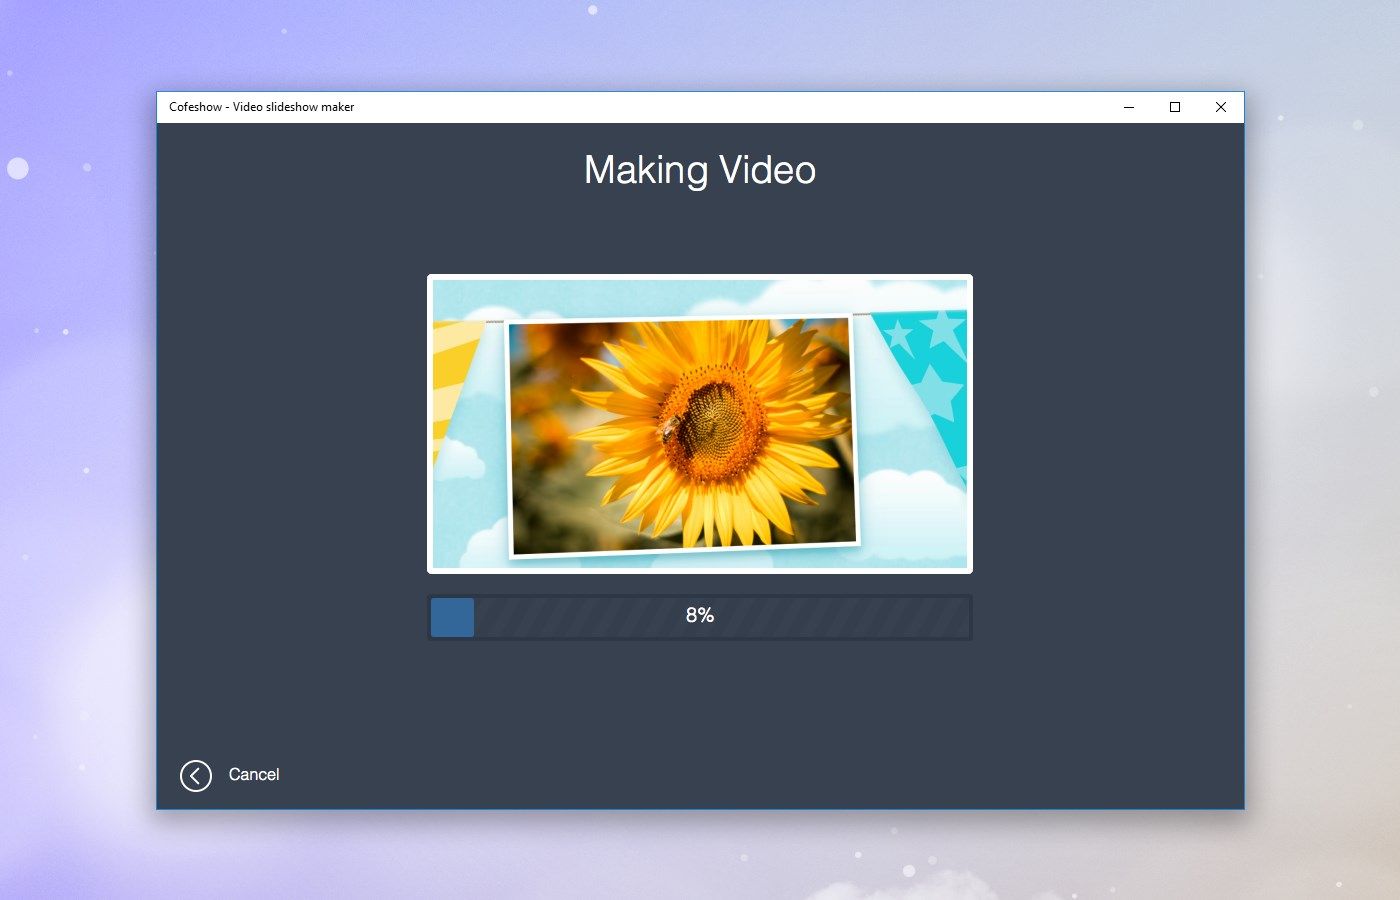 Video slideshow maker - Cofeshow - FREE to try